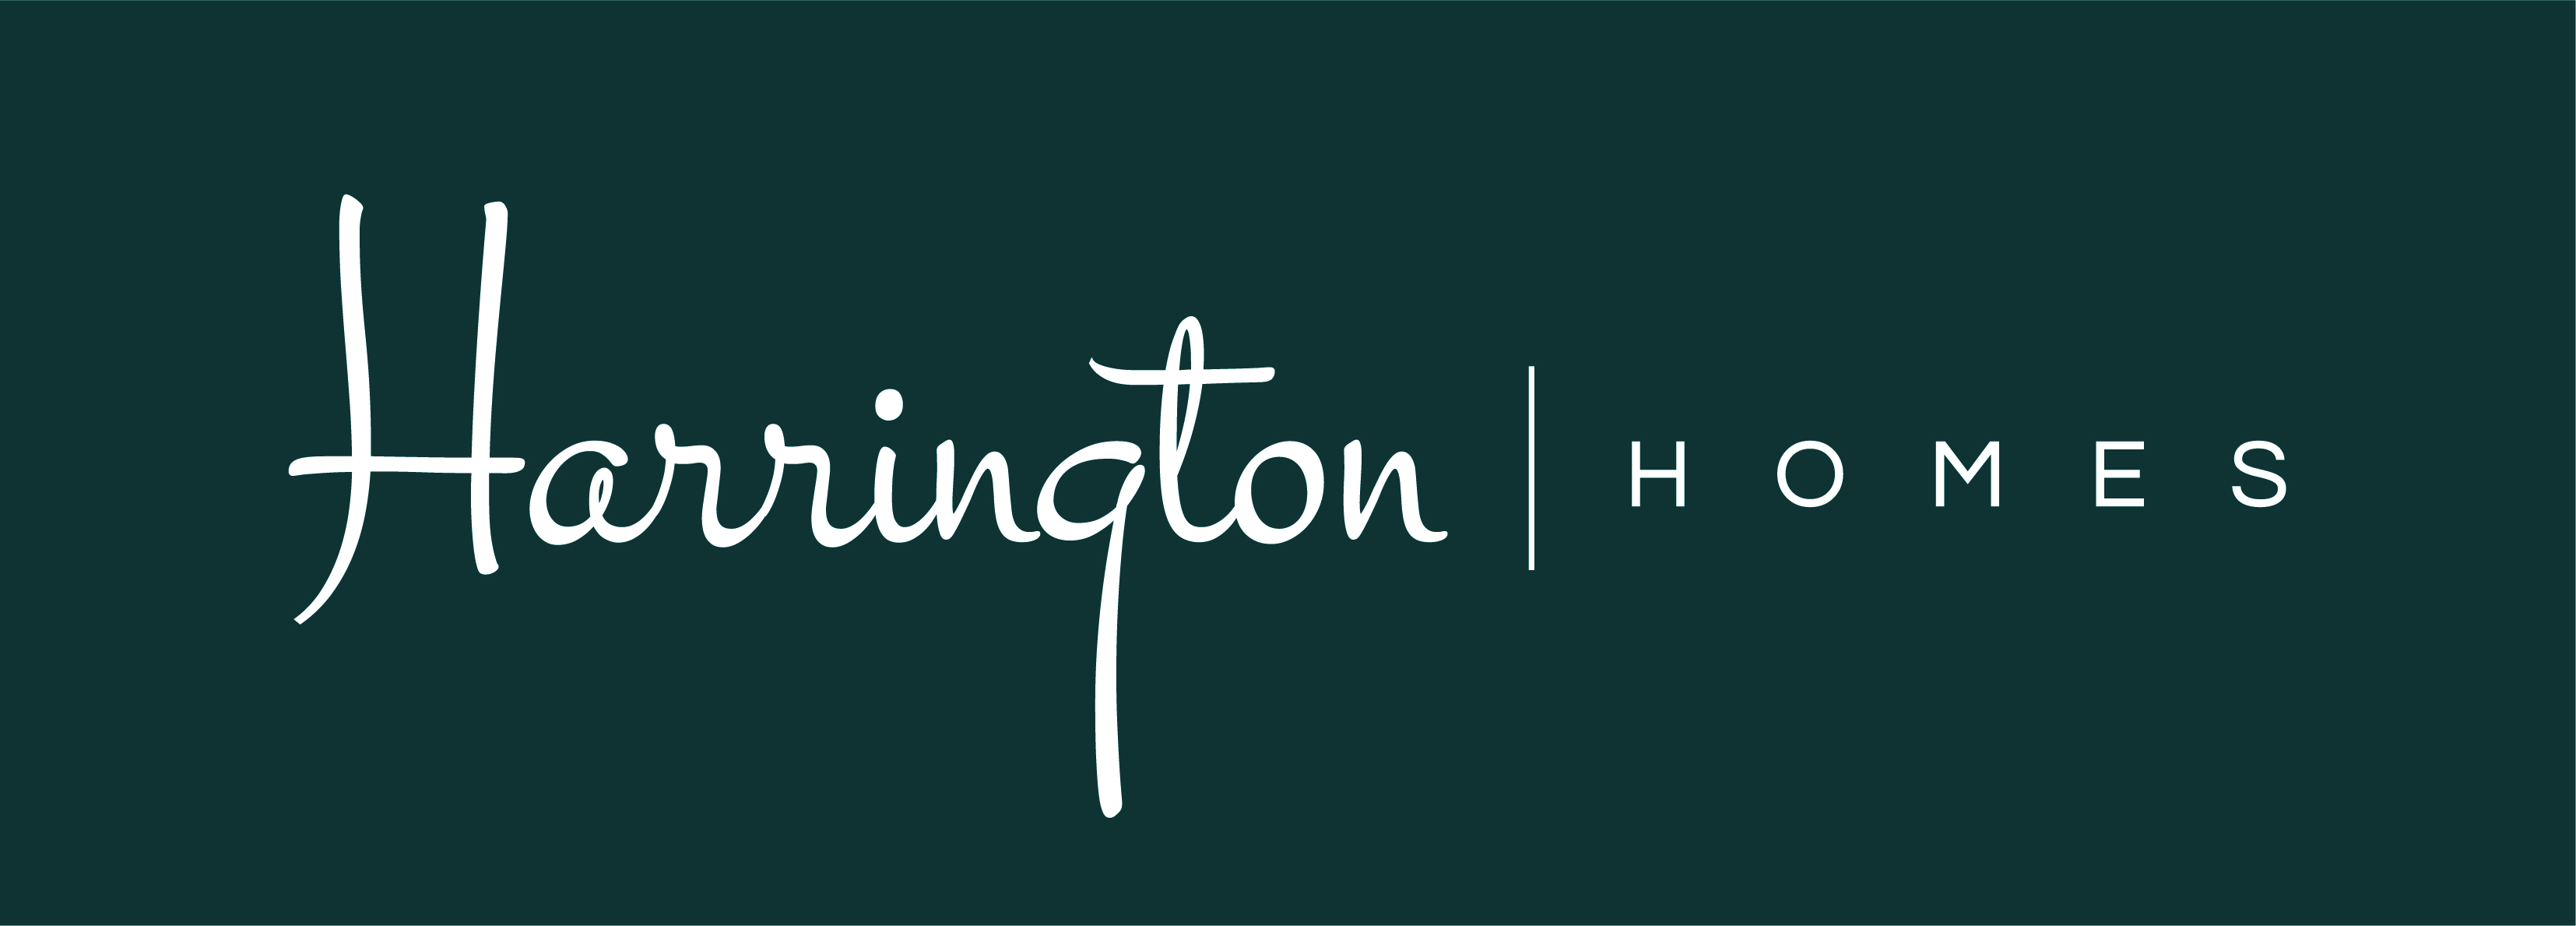 We would Like to welcome Harrington Homes